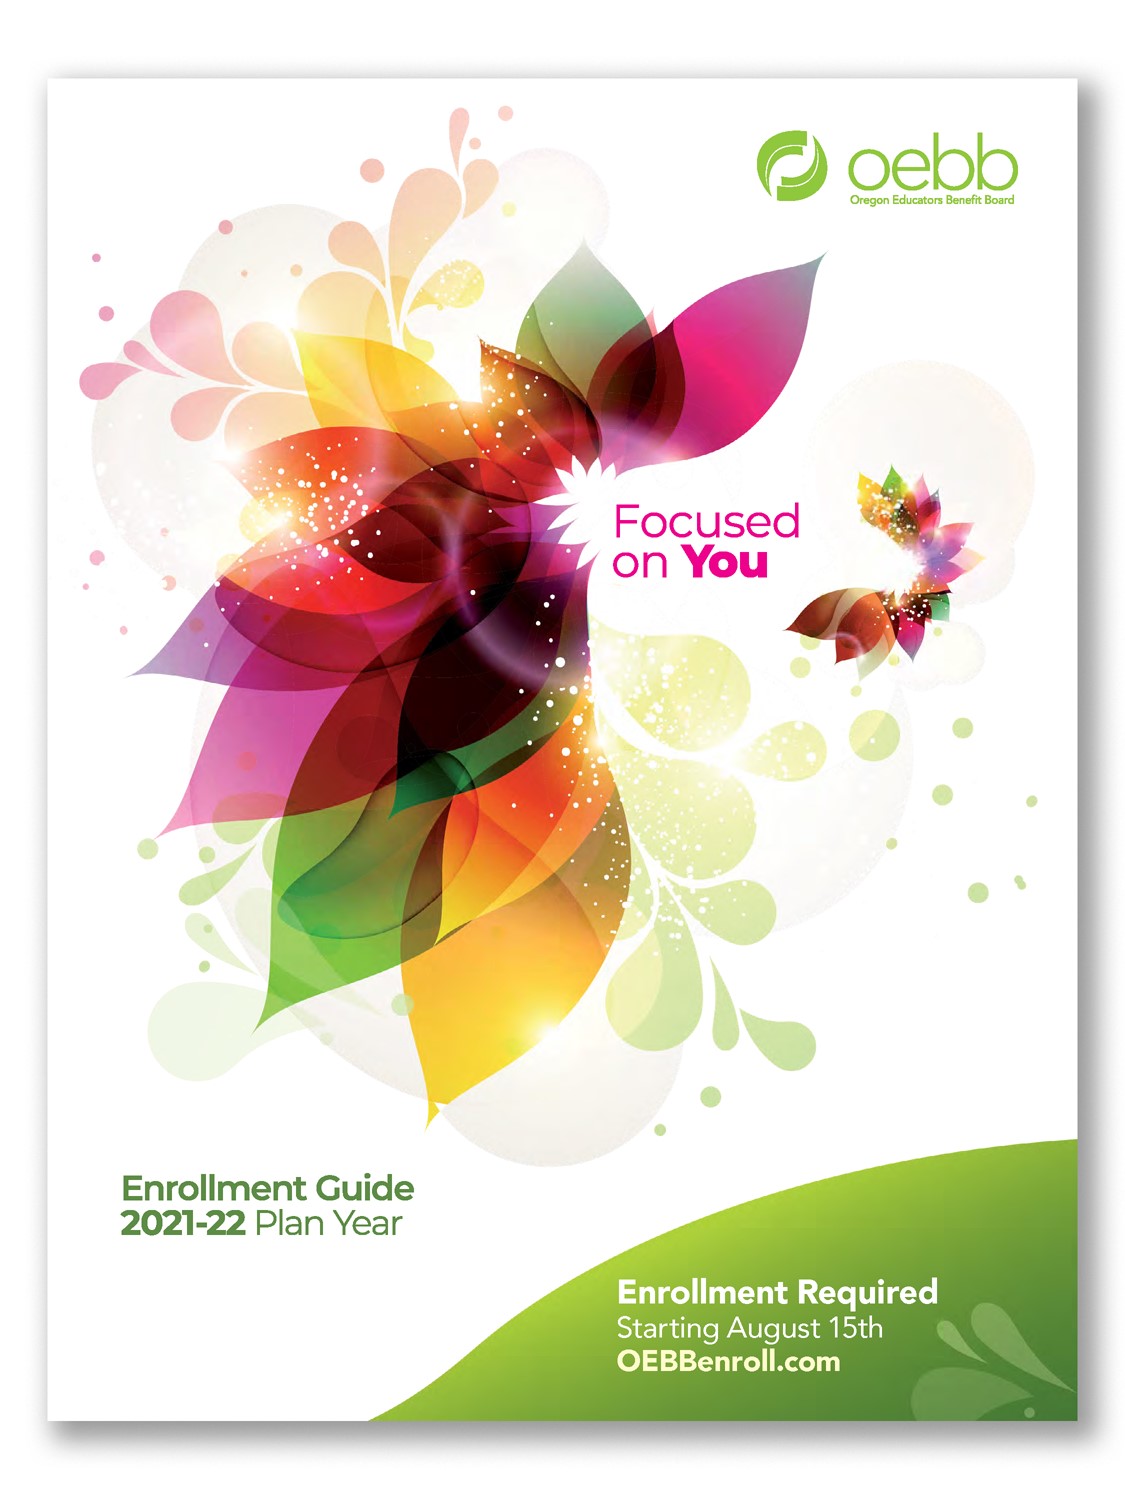 OEBB 202-21 Plan Year Enrollment Guide Cover